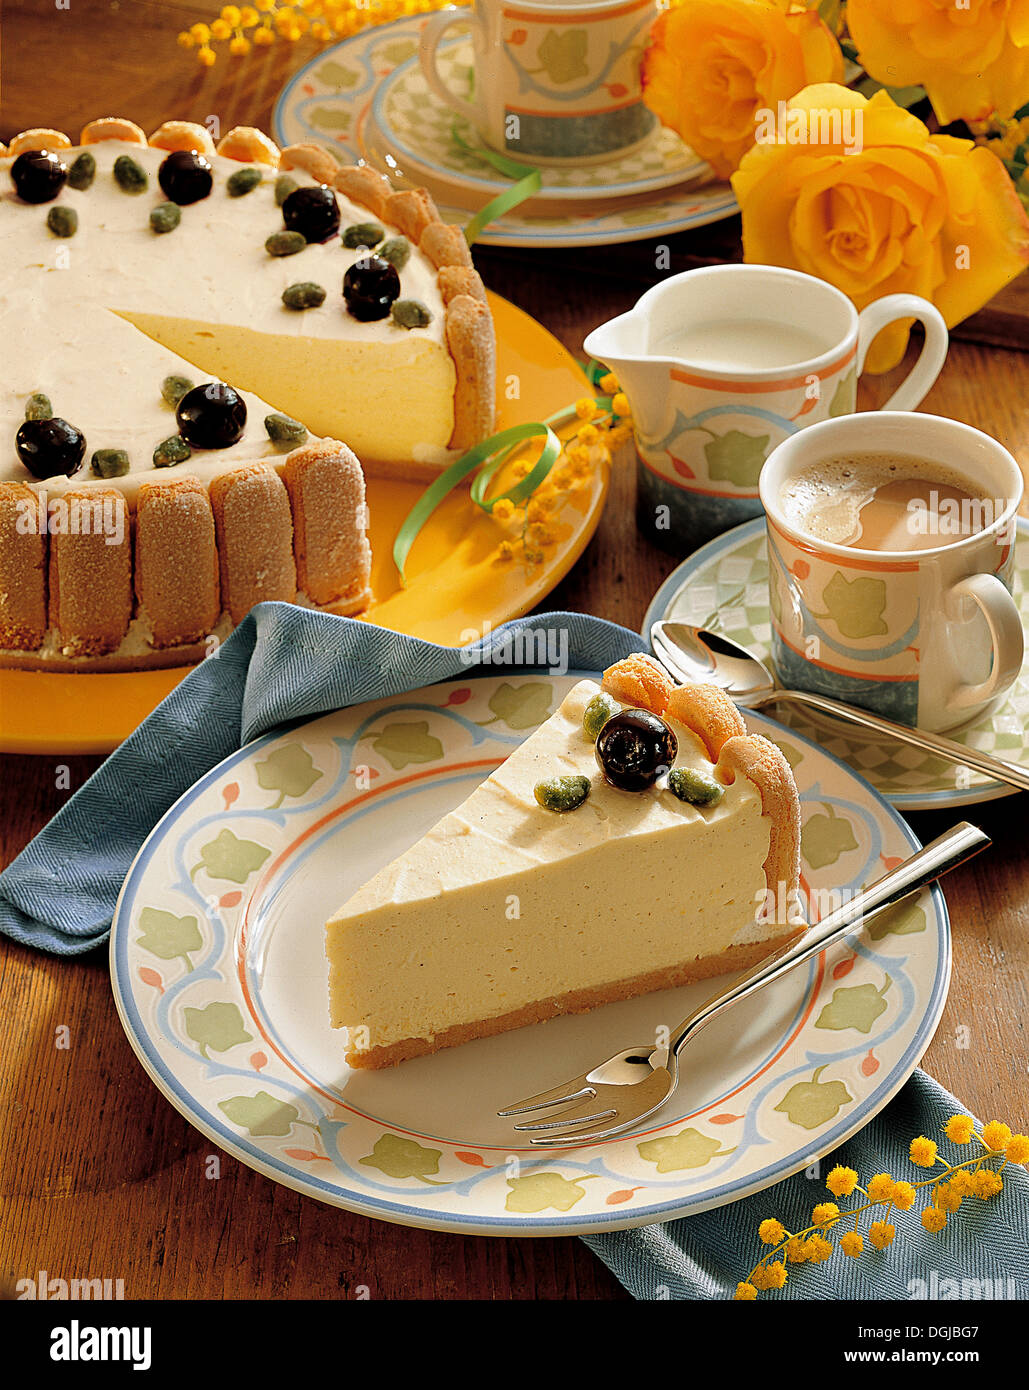 Sponge cake with ricotta cheese, Italy. Stock Photo